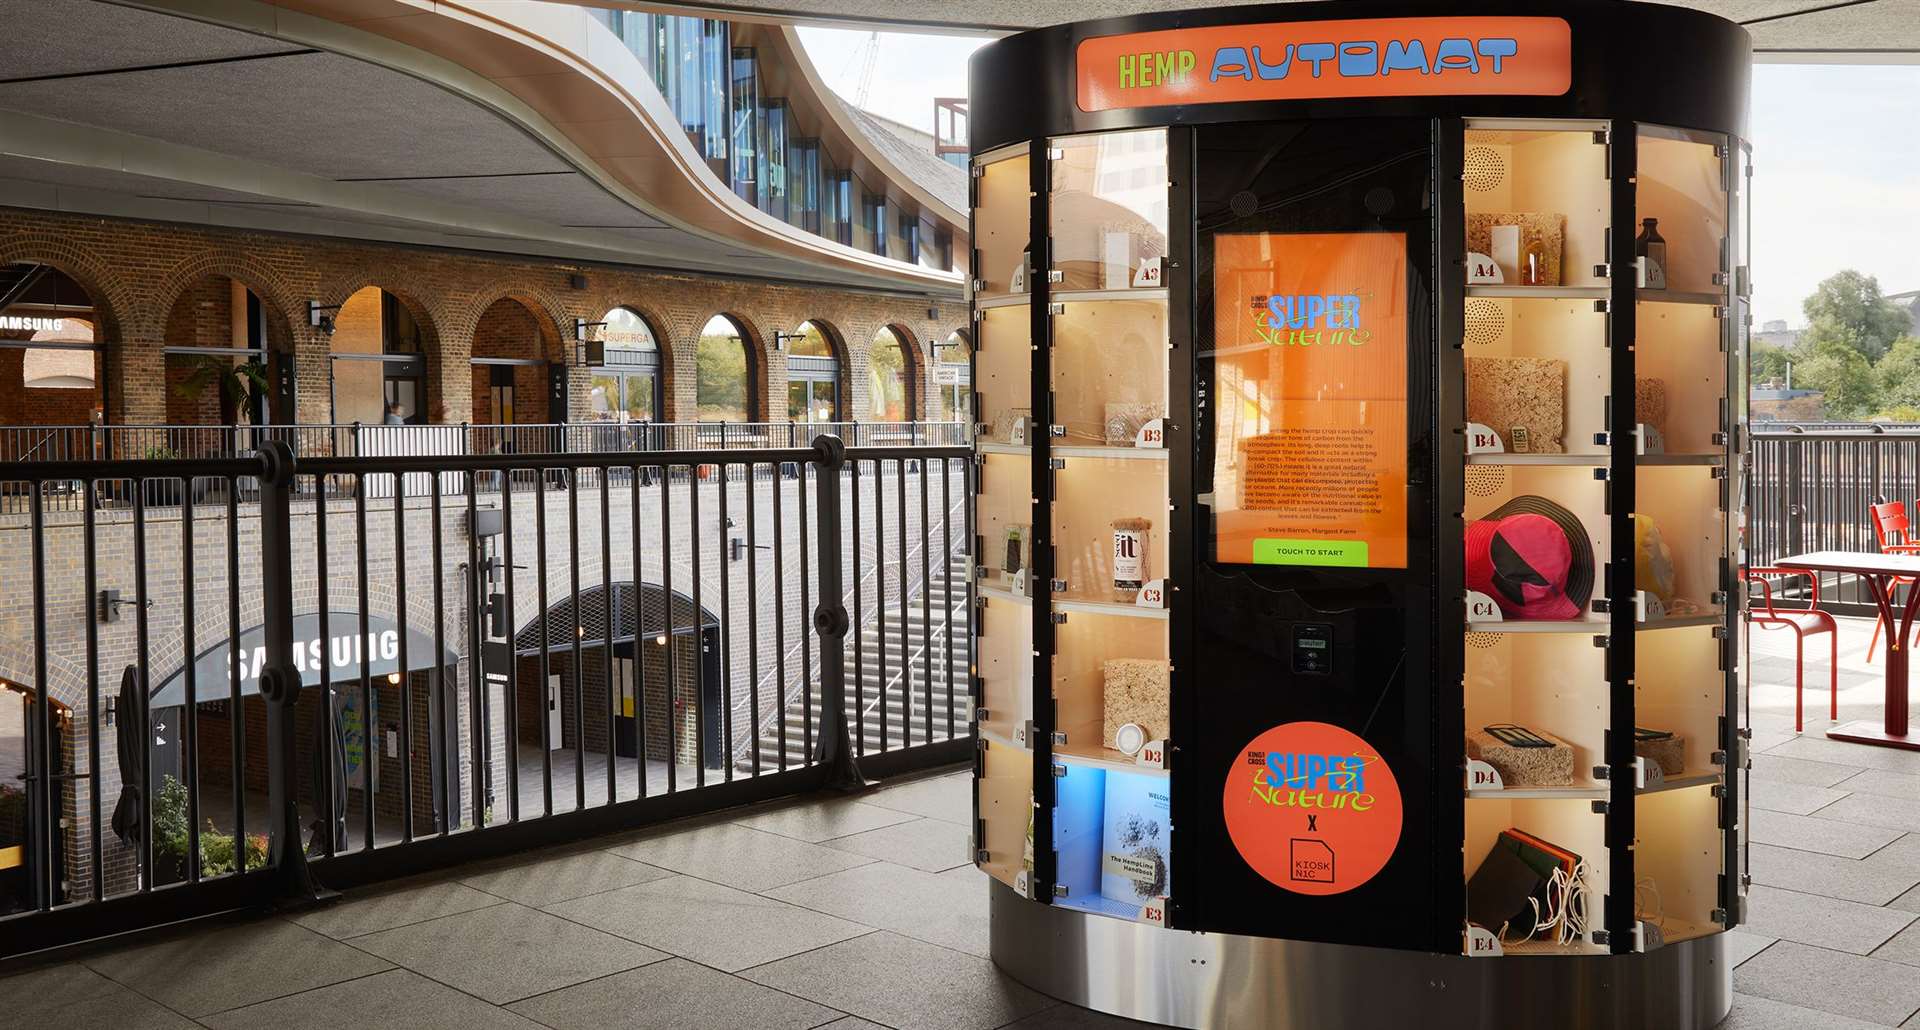 The Hemp Automat vending machine at Coal Drops Yard Picture: Ed Reeve